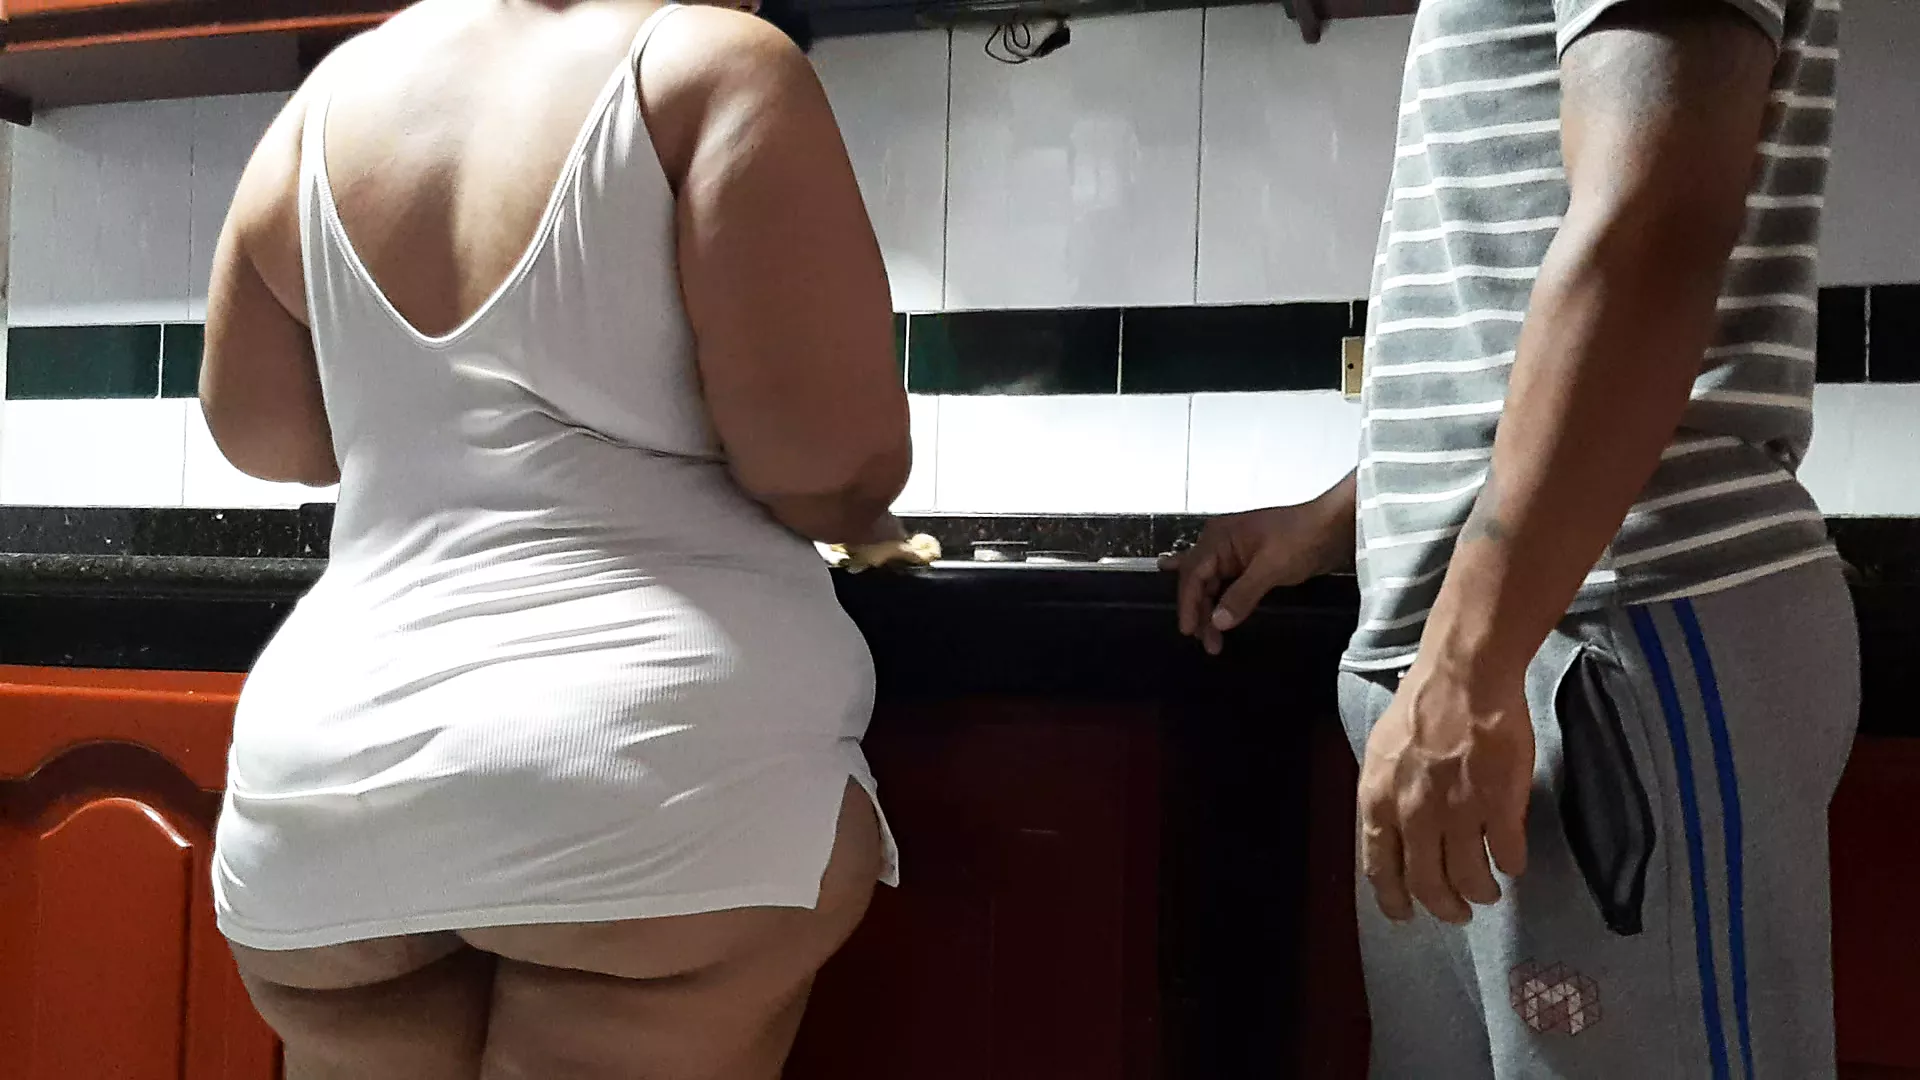 Mum Fuck My Servant - I Found My Best Friend's Mom Pantyless in the Kitchen | xHamster